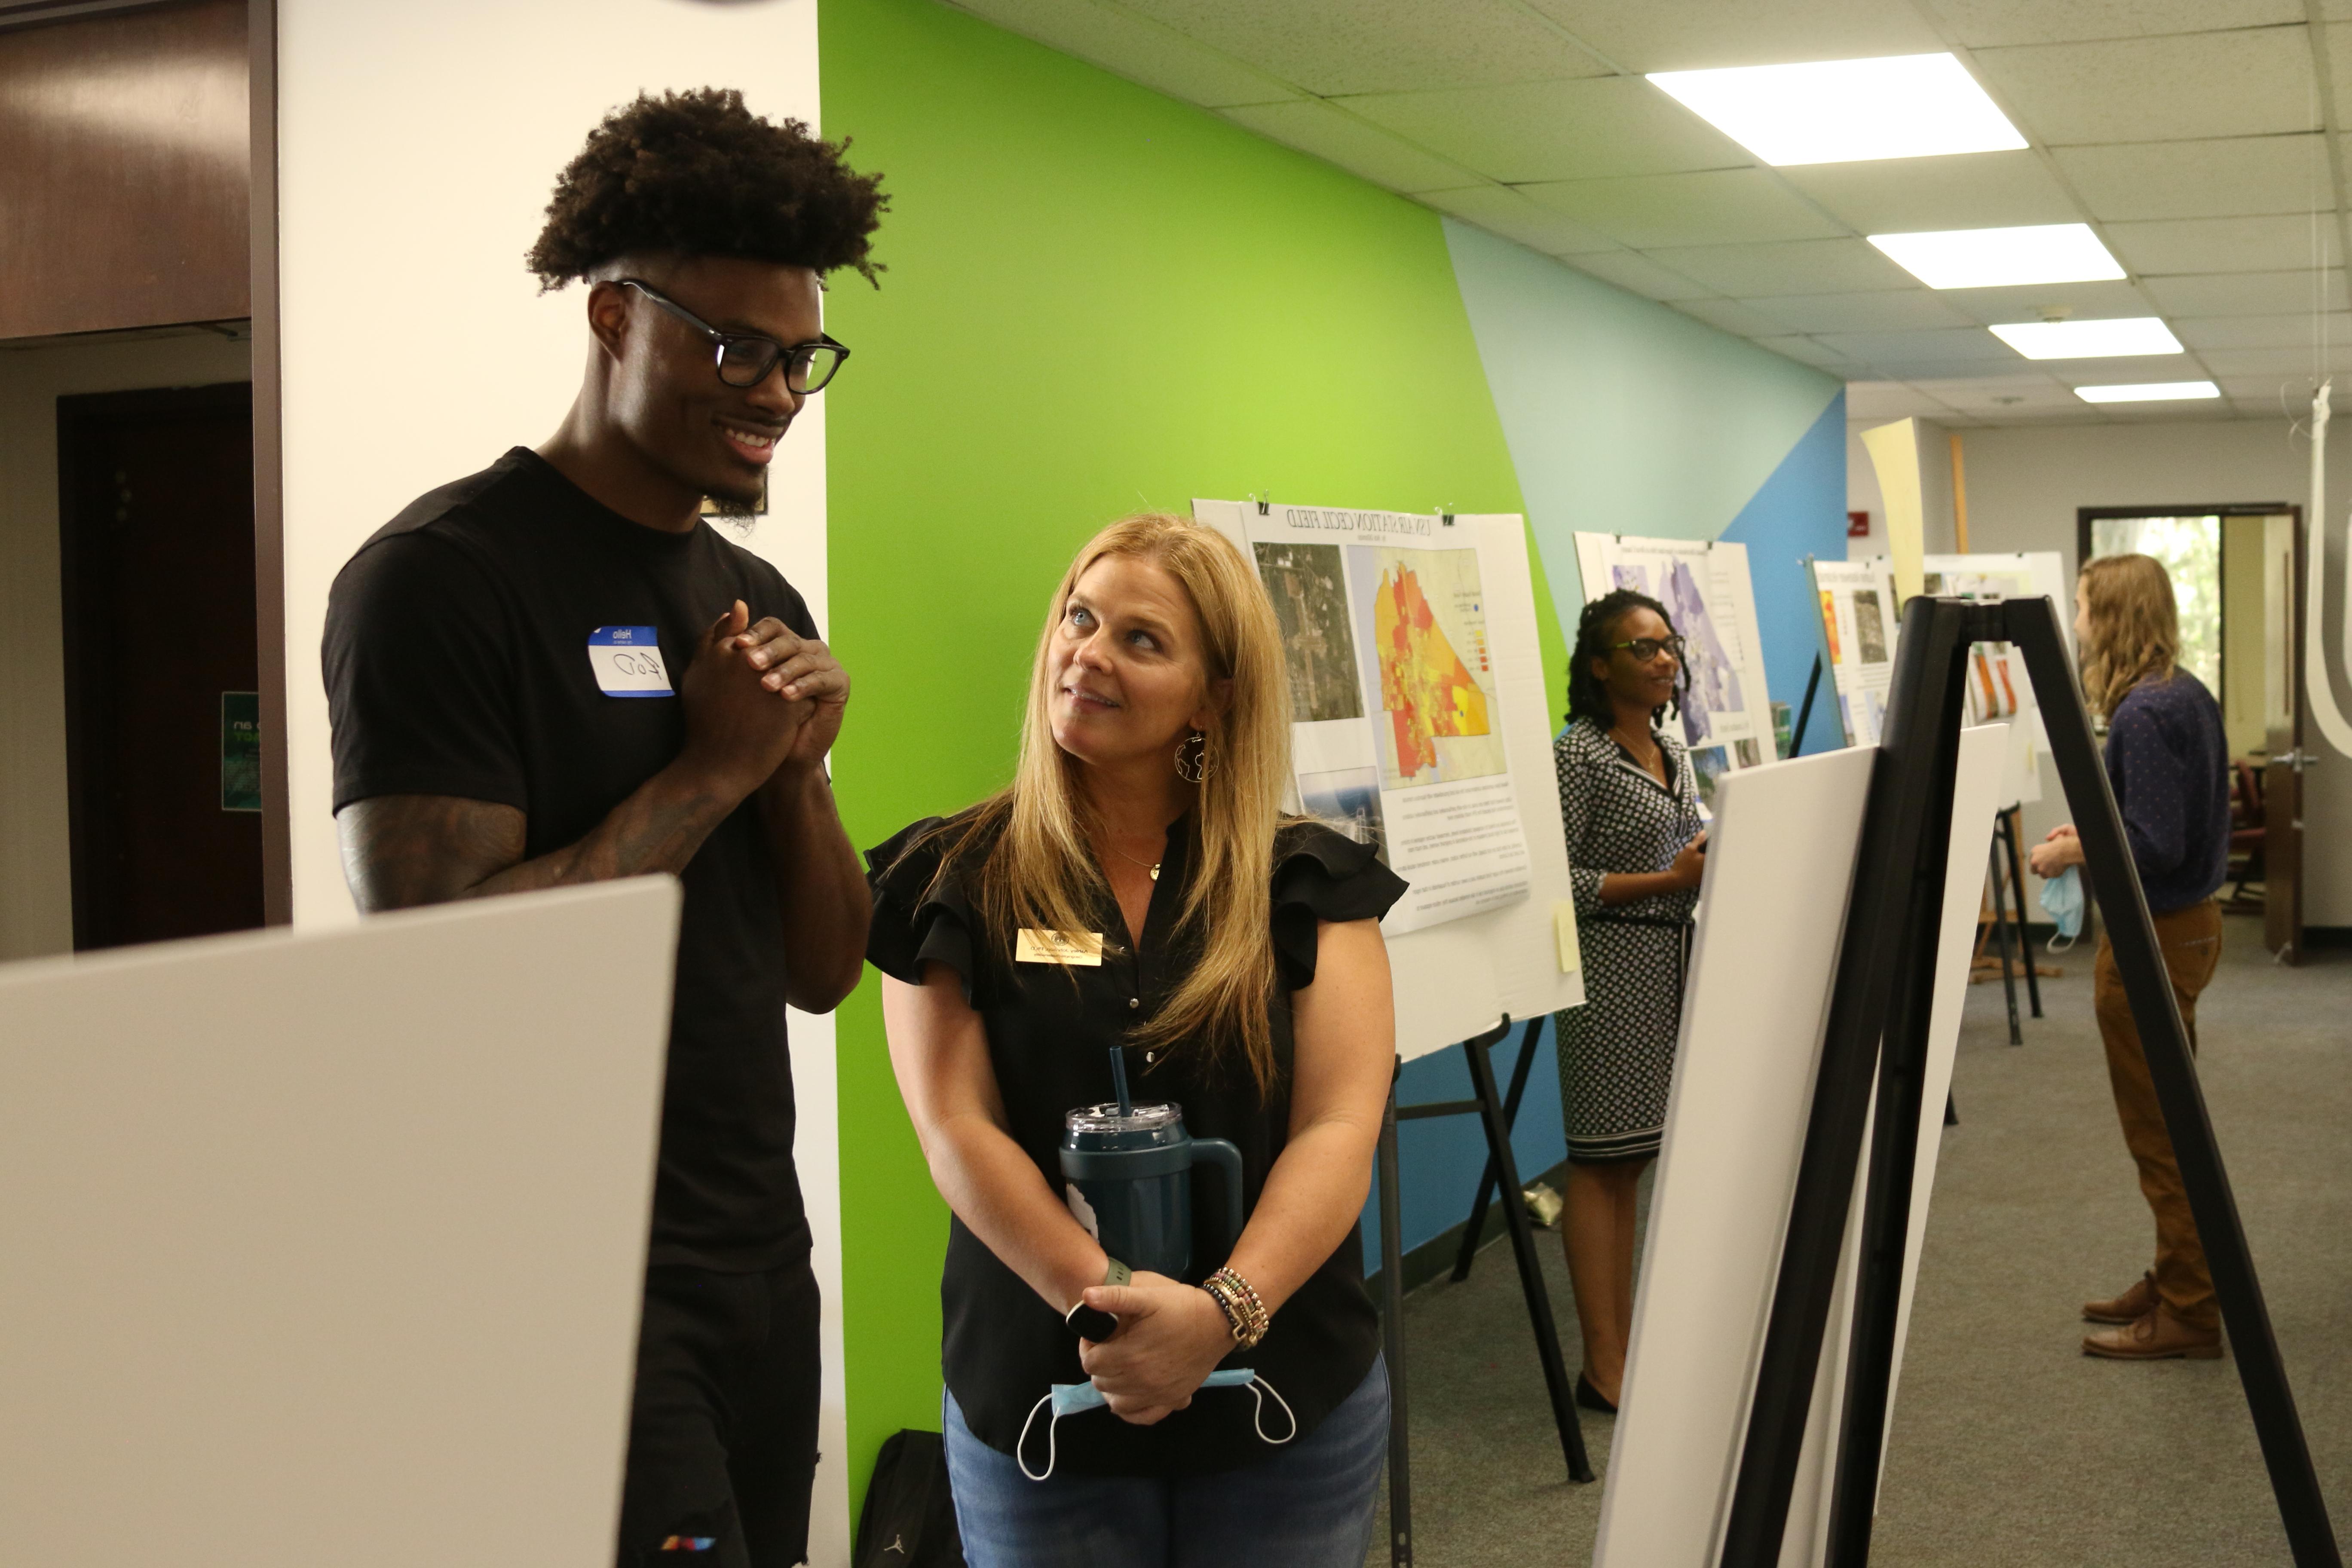 Dr. 阿什利·约翰逊和一名男学生在一面绿蓝相间的彩色墙前一起看地图.